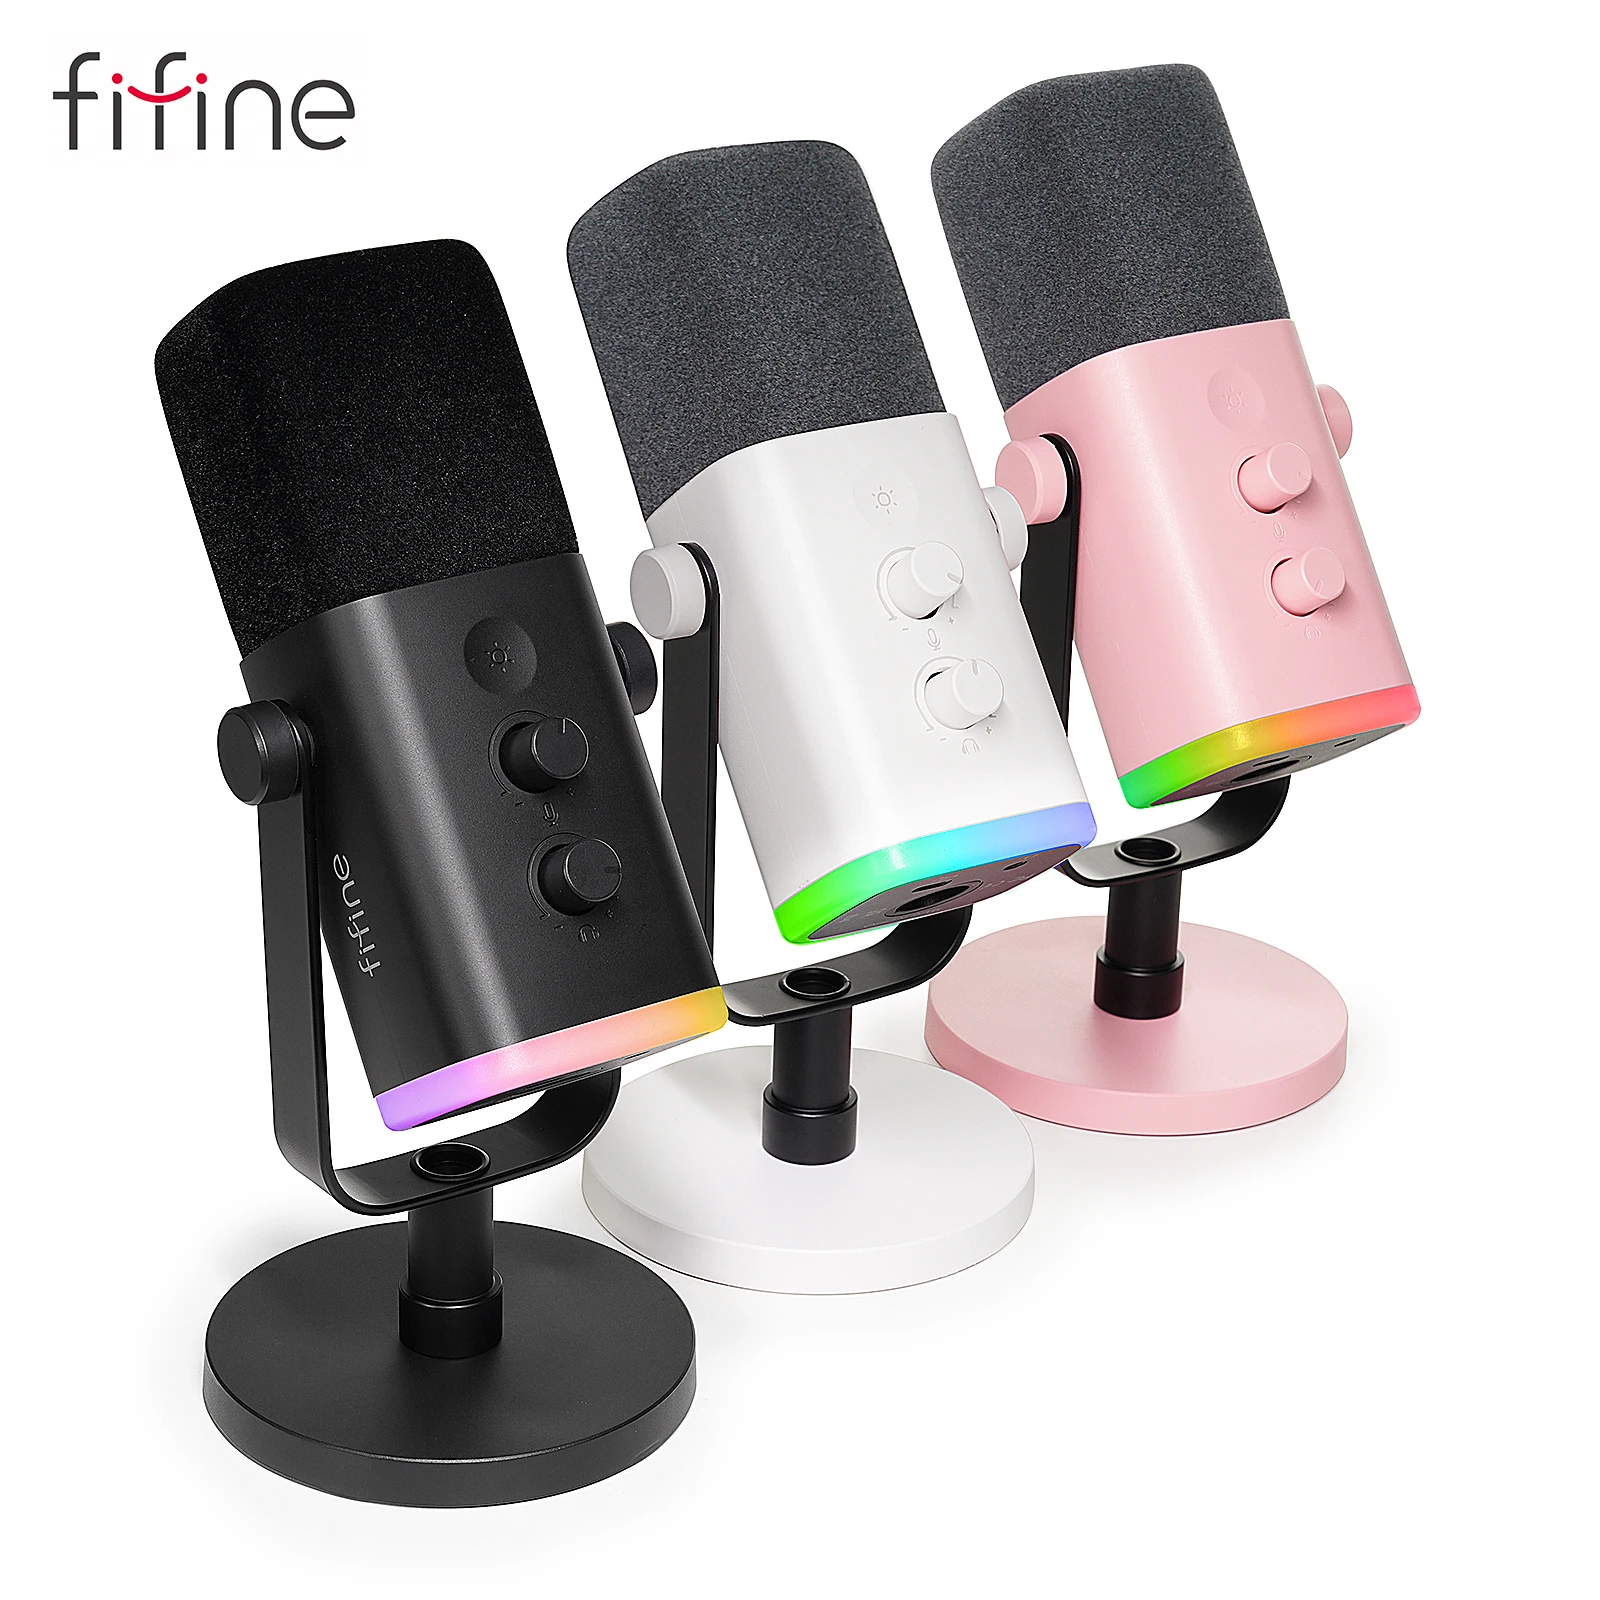 fifine am8 wired microfono gamer microphone